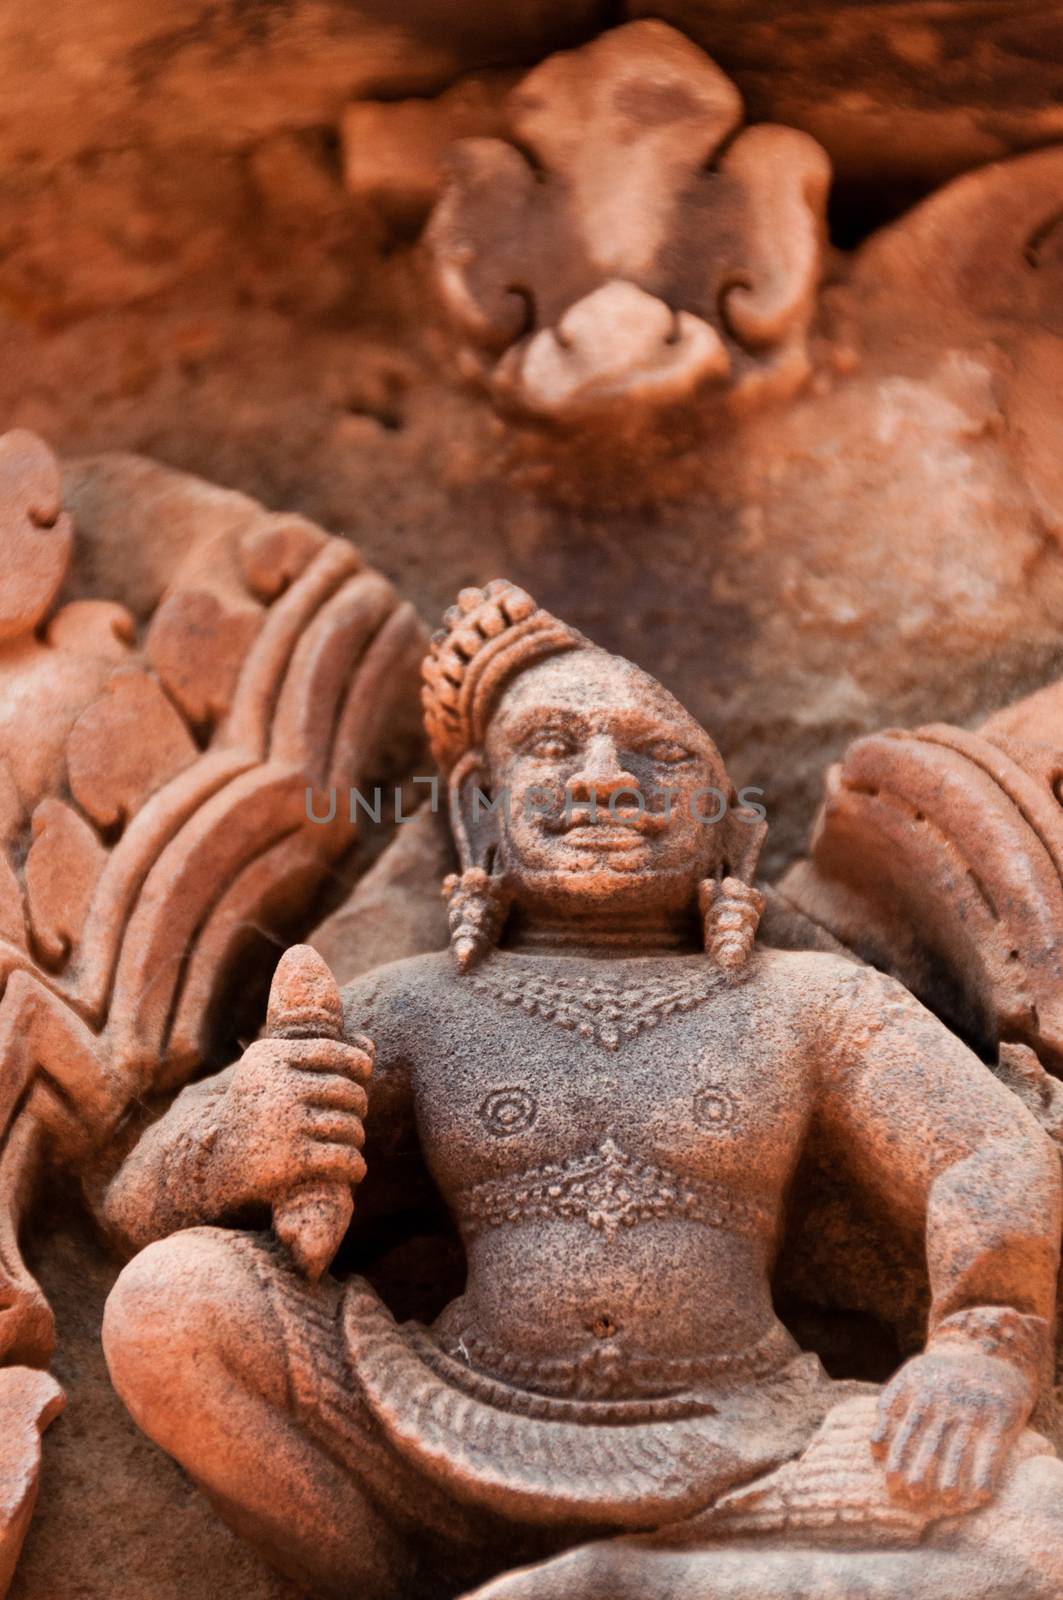 Detail of stone carvings at Banteay Srei Angkor Wat